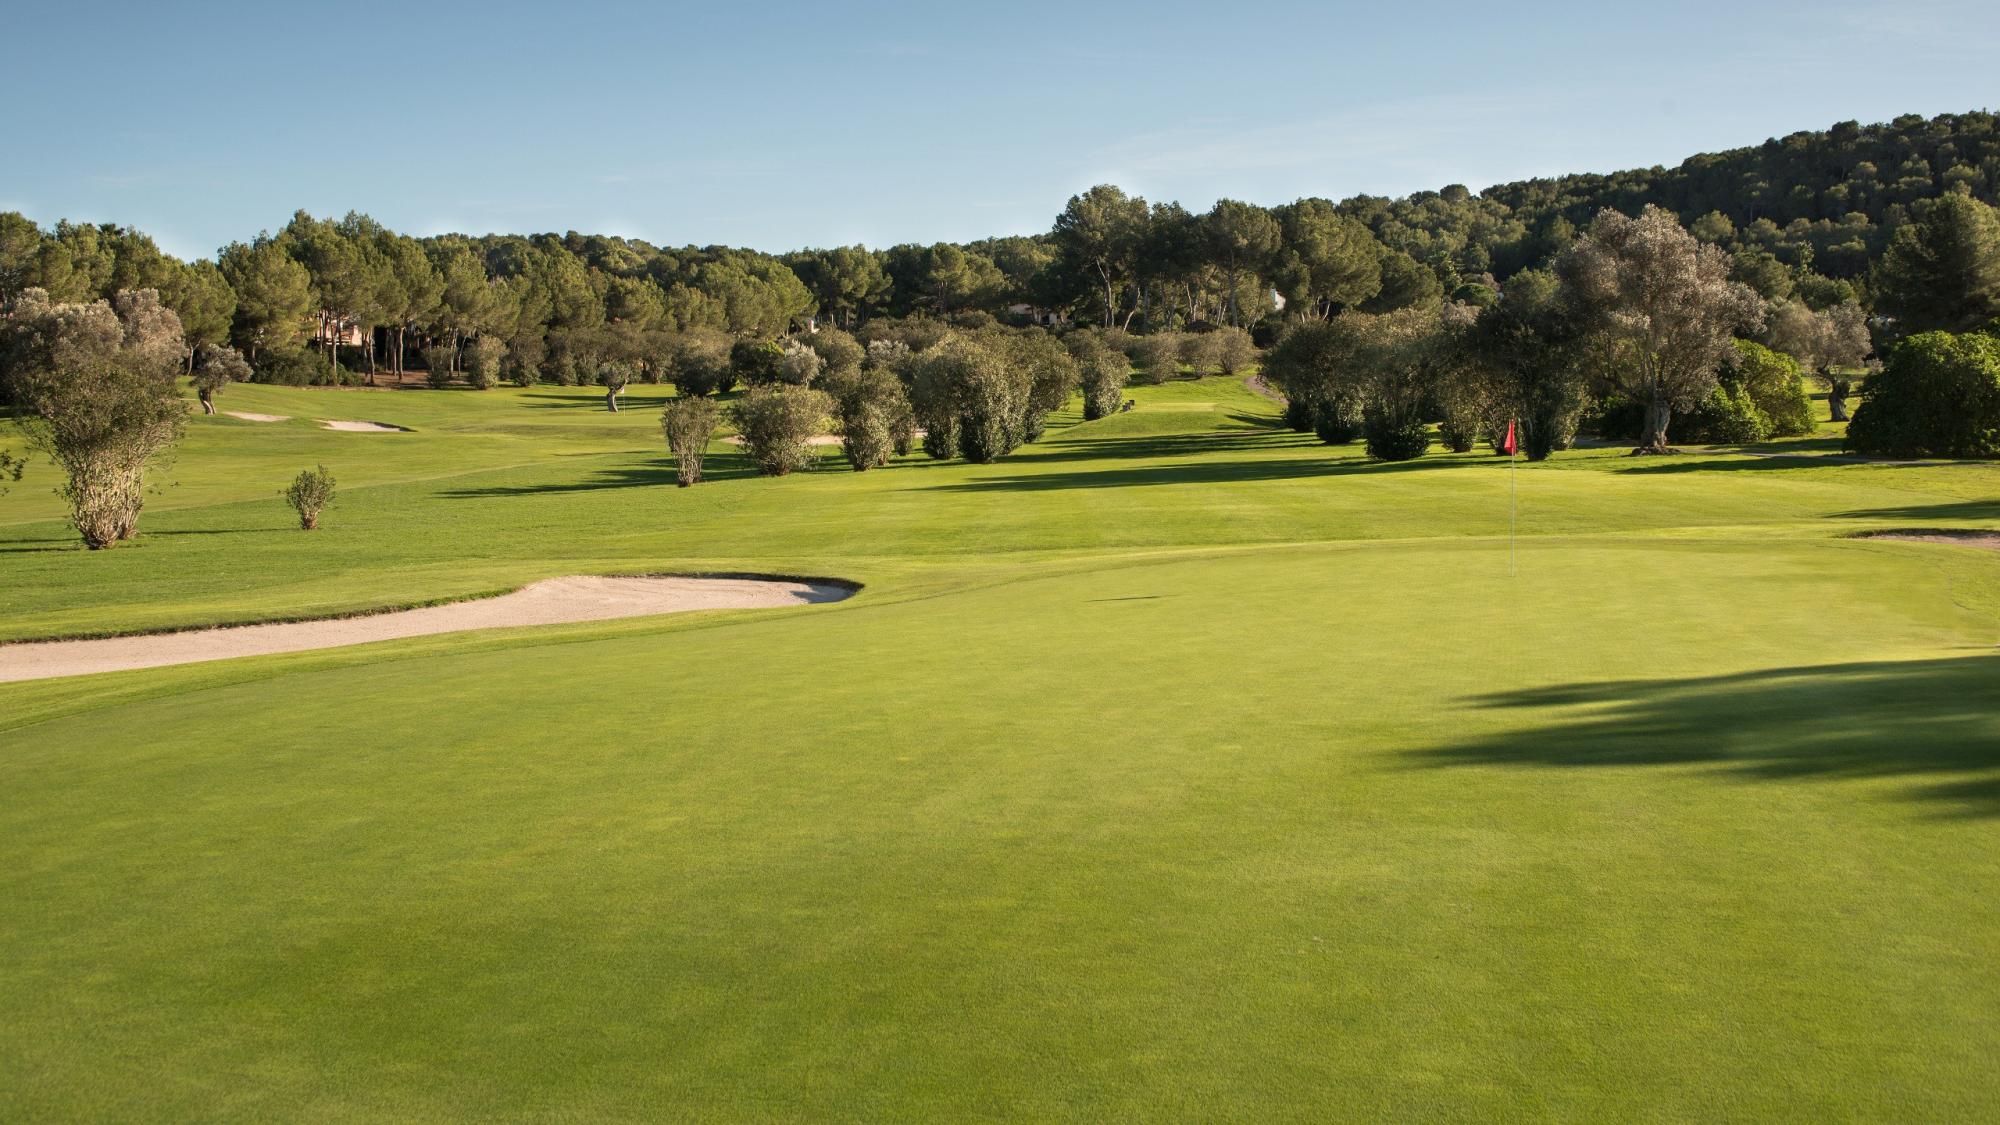 Golf Santa Ponsa 1's impressive golf course within sensational Mallorca.